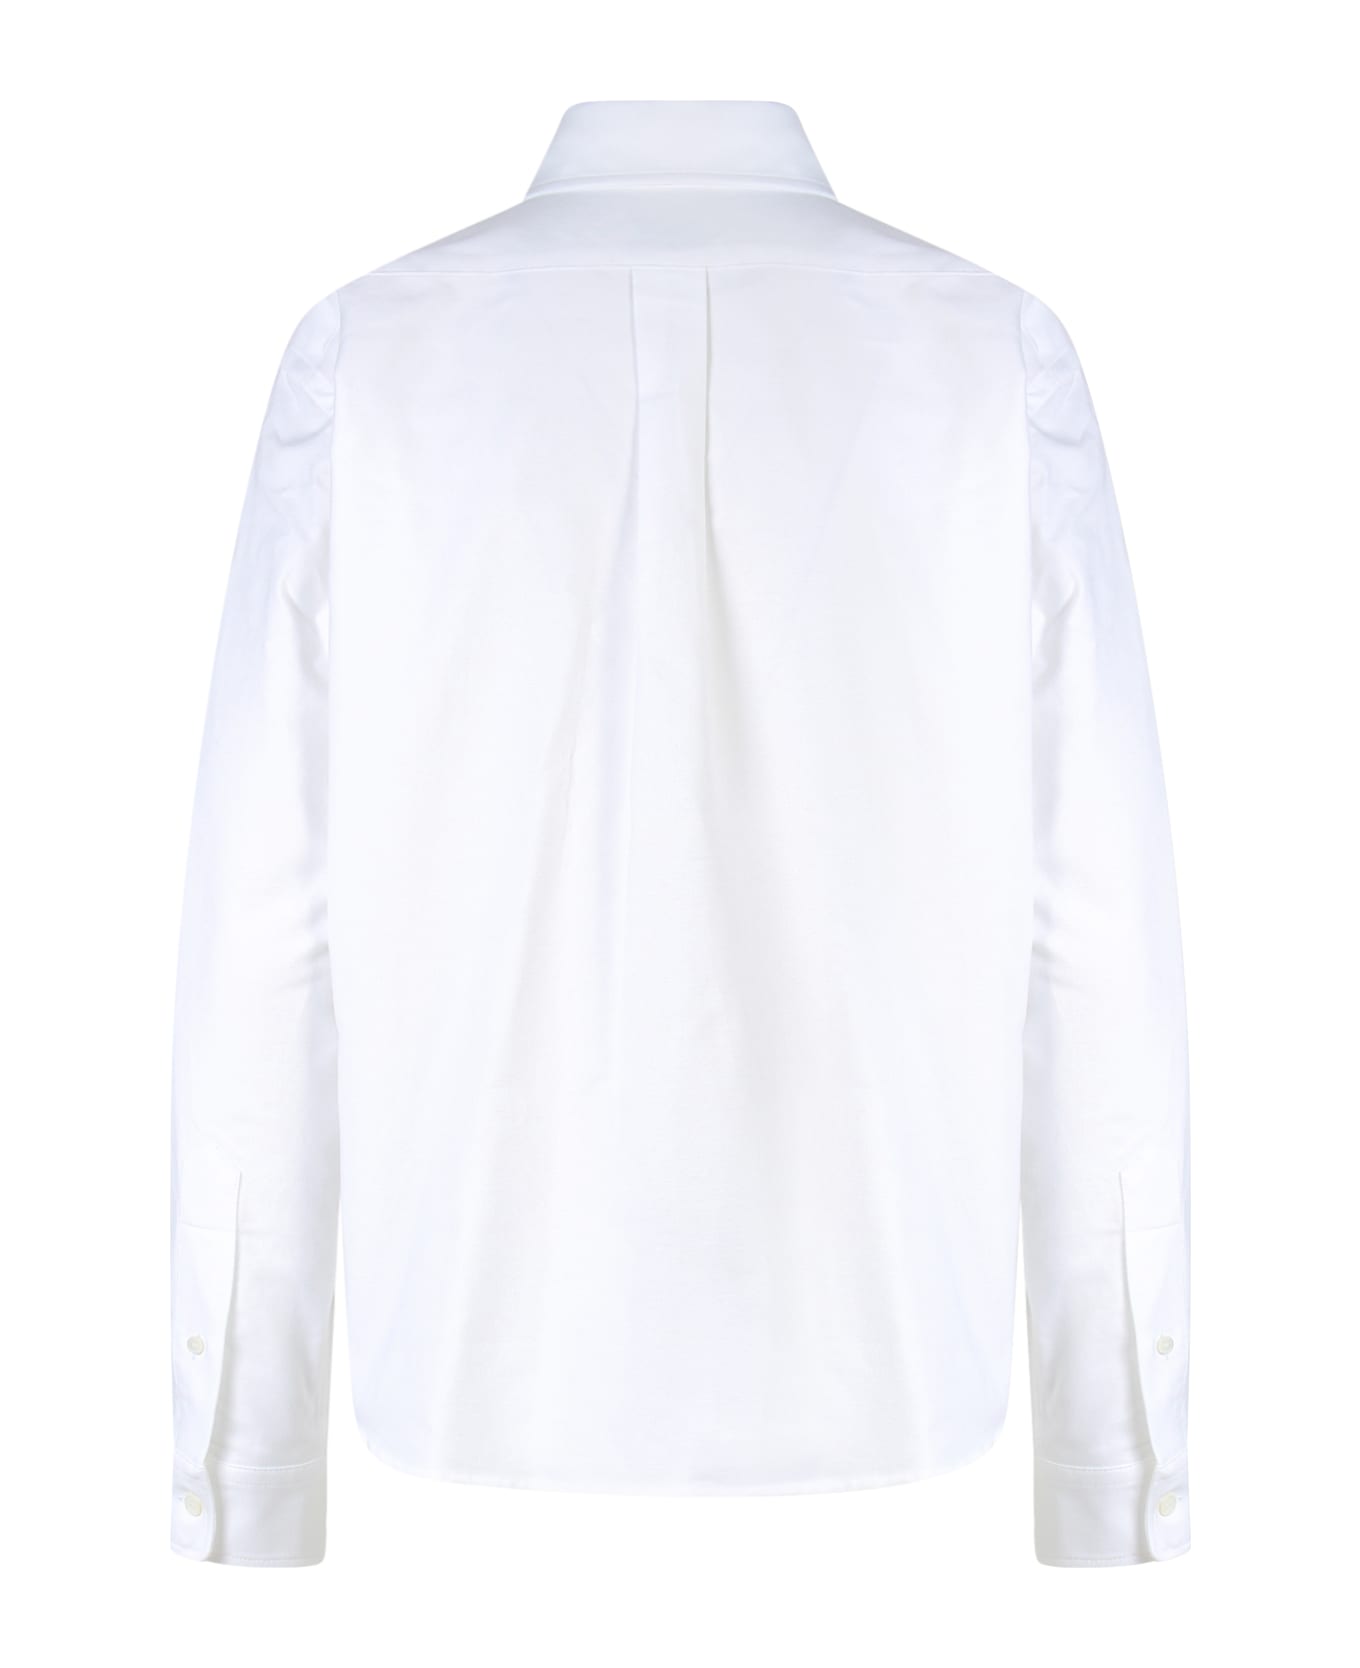 Kenzo Ml Shirt - White シャツ